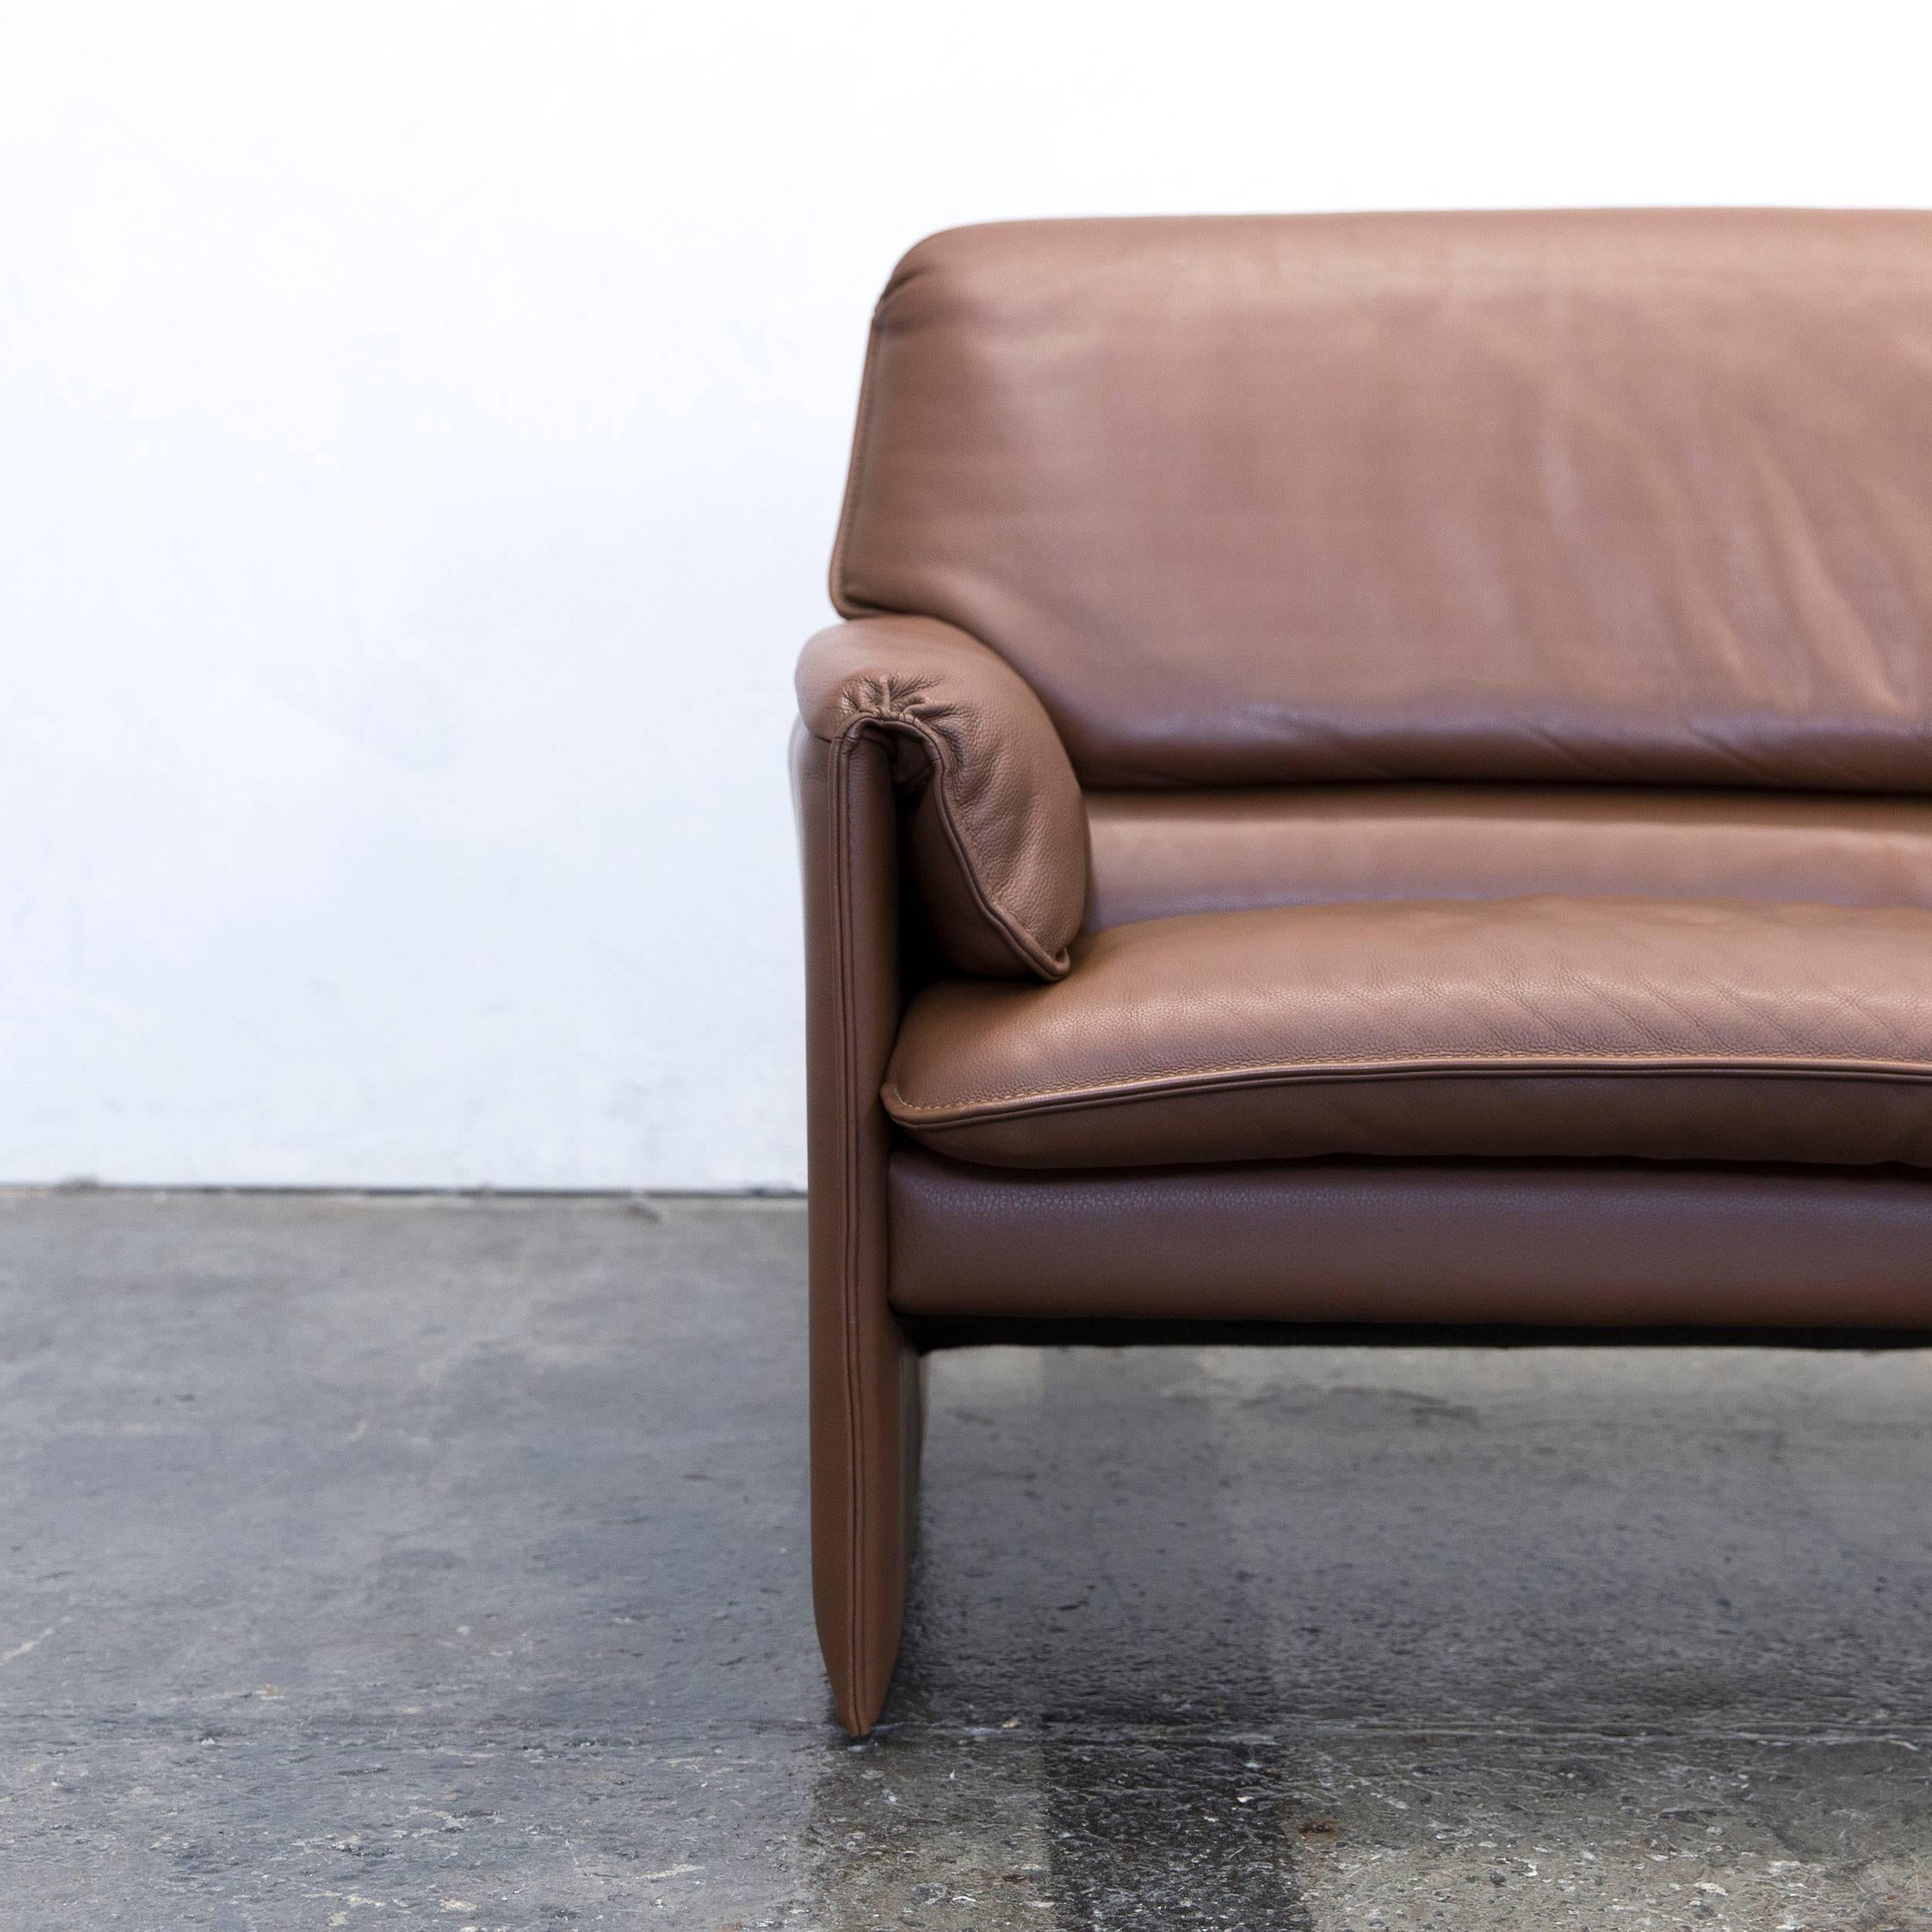 Brown colored original Leolux Bora designer leather sofa in a minimalistic and modern design, made for pure comfort.